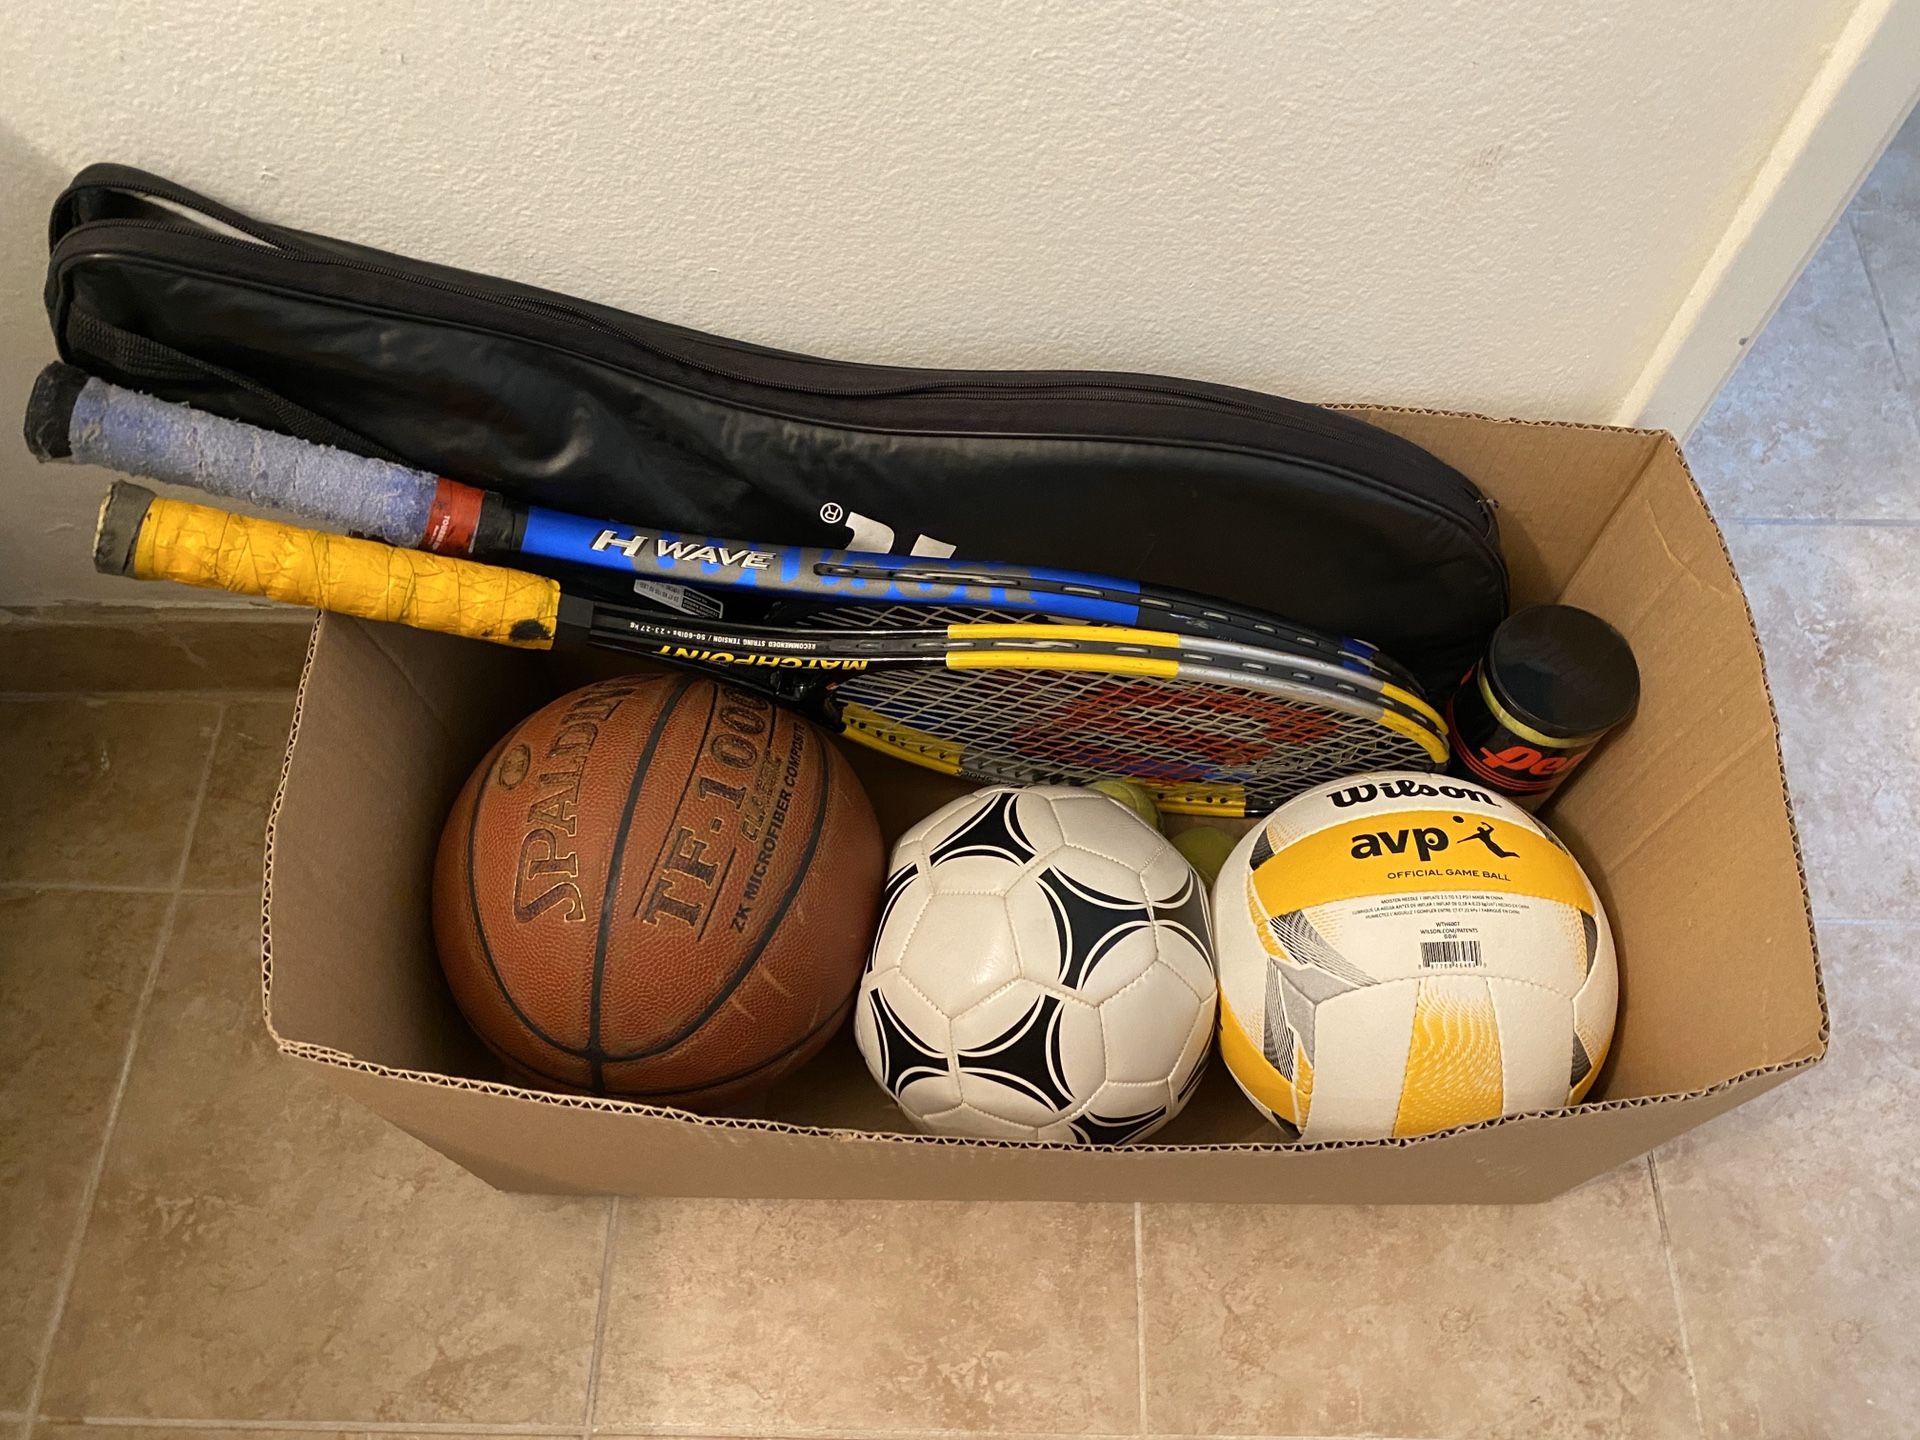 Sports enthusiasts- AVP volleyball, basketball, soccer ball, 2 tennis rackets with tennis balls